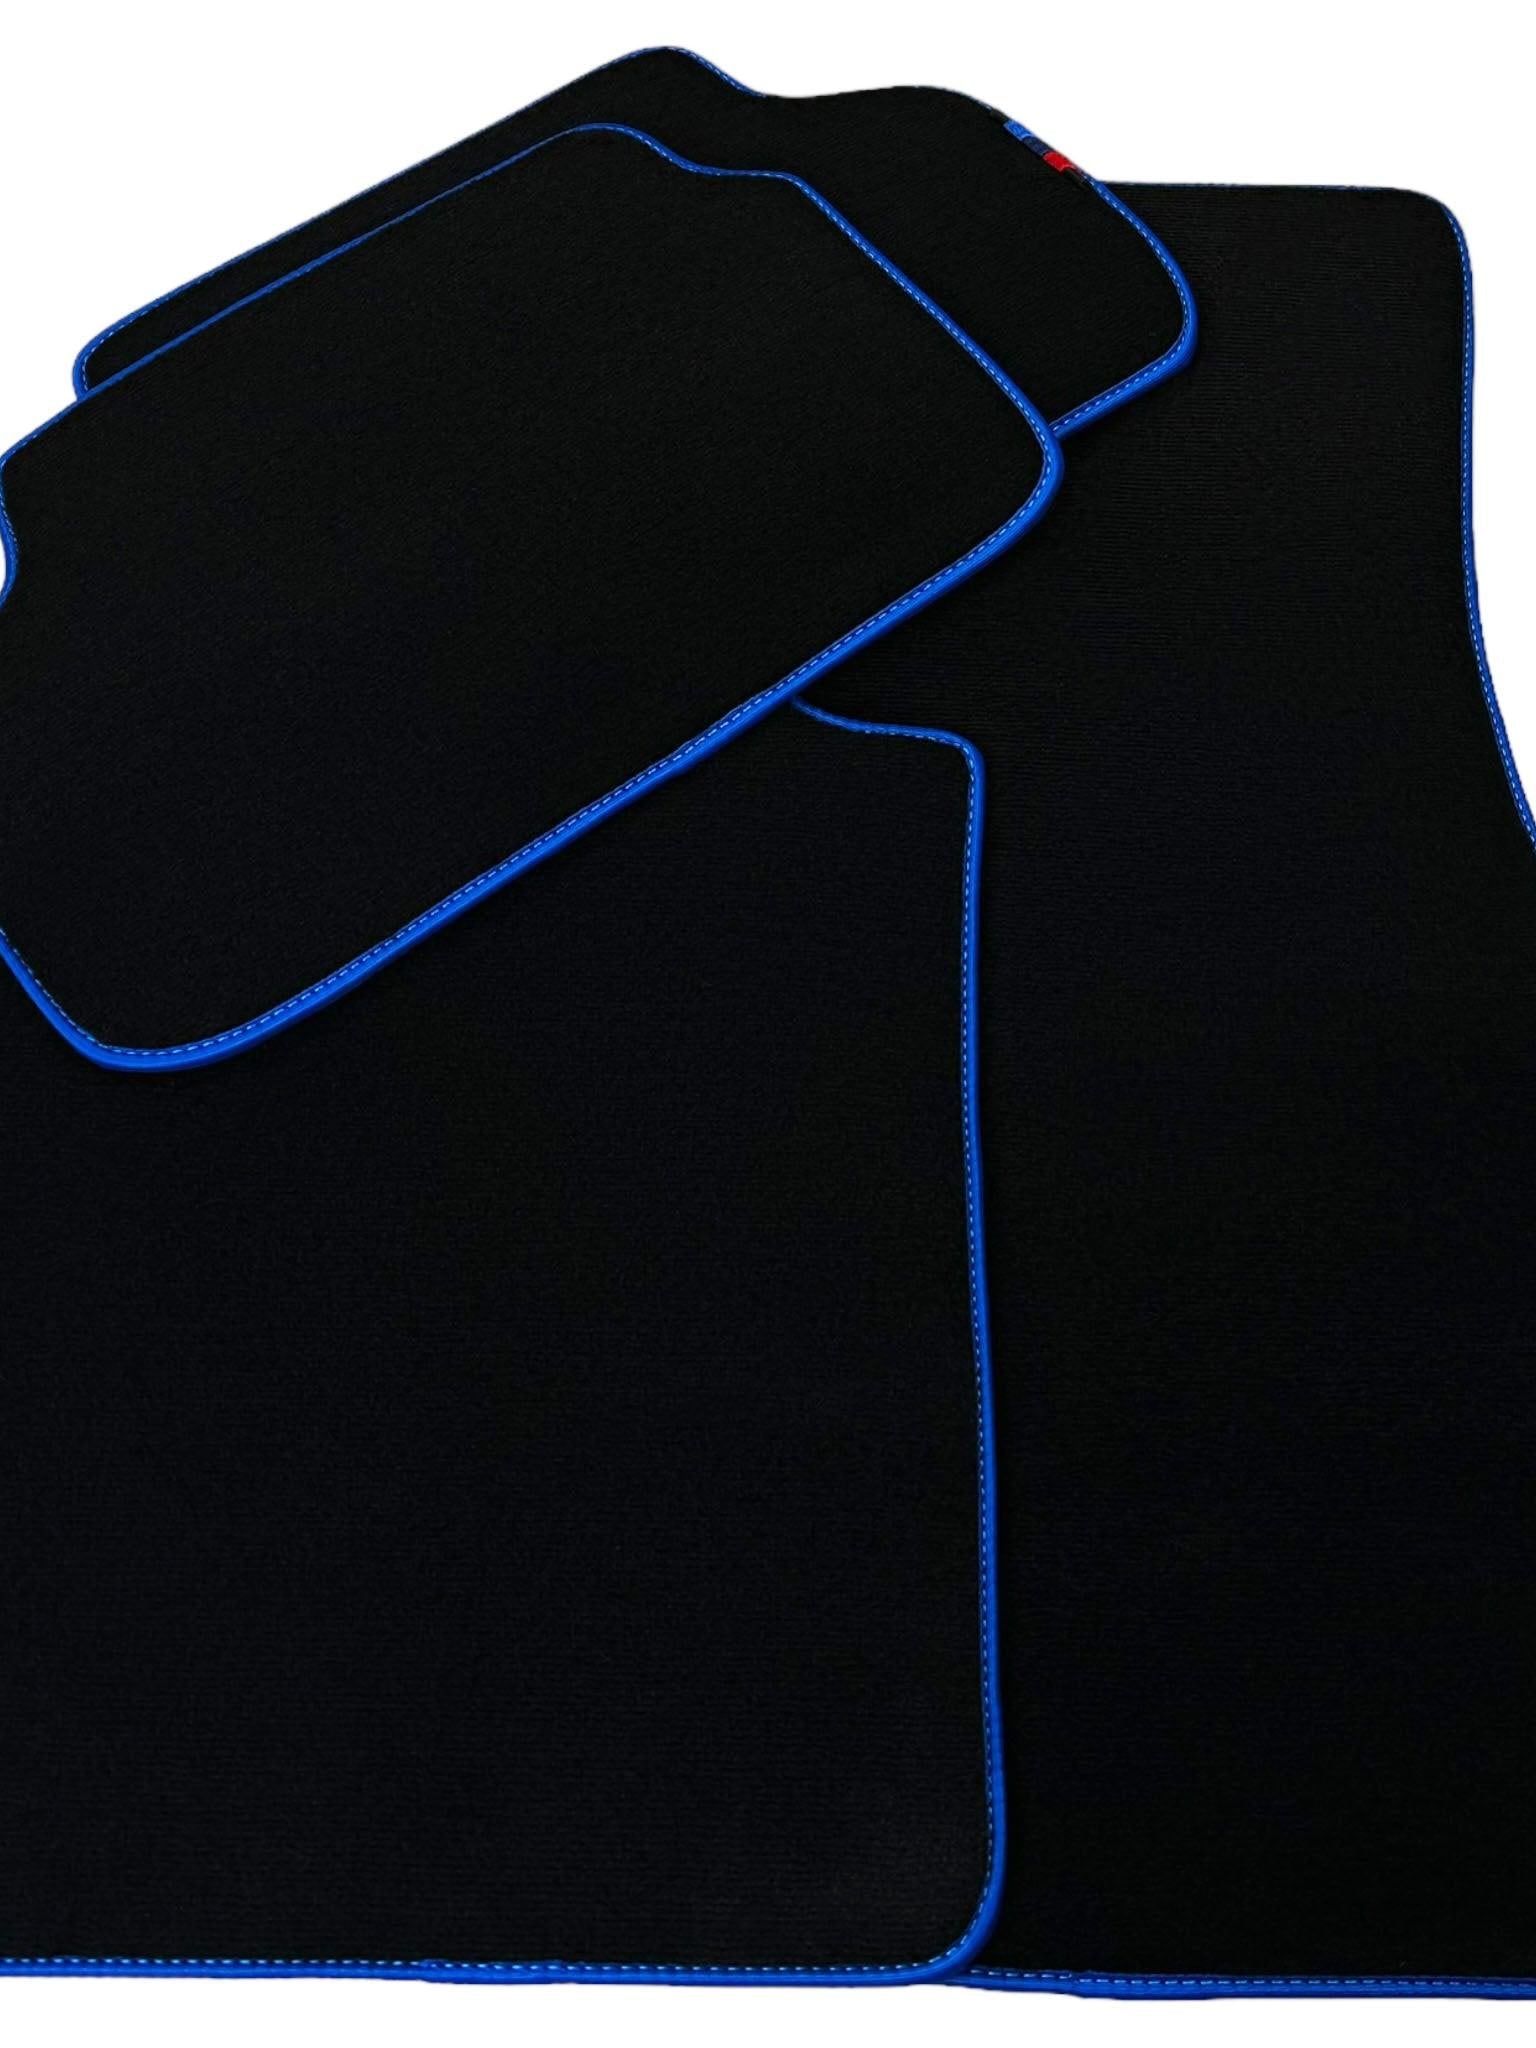 Black Floor Floor Mats For BMW X6 Series E71 | Blue Trim